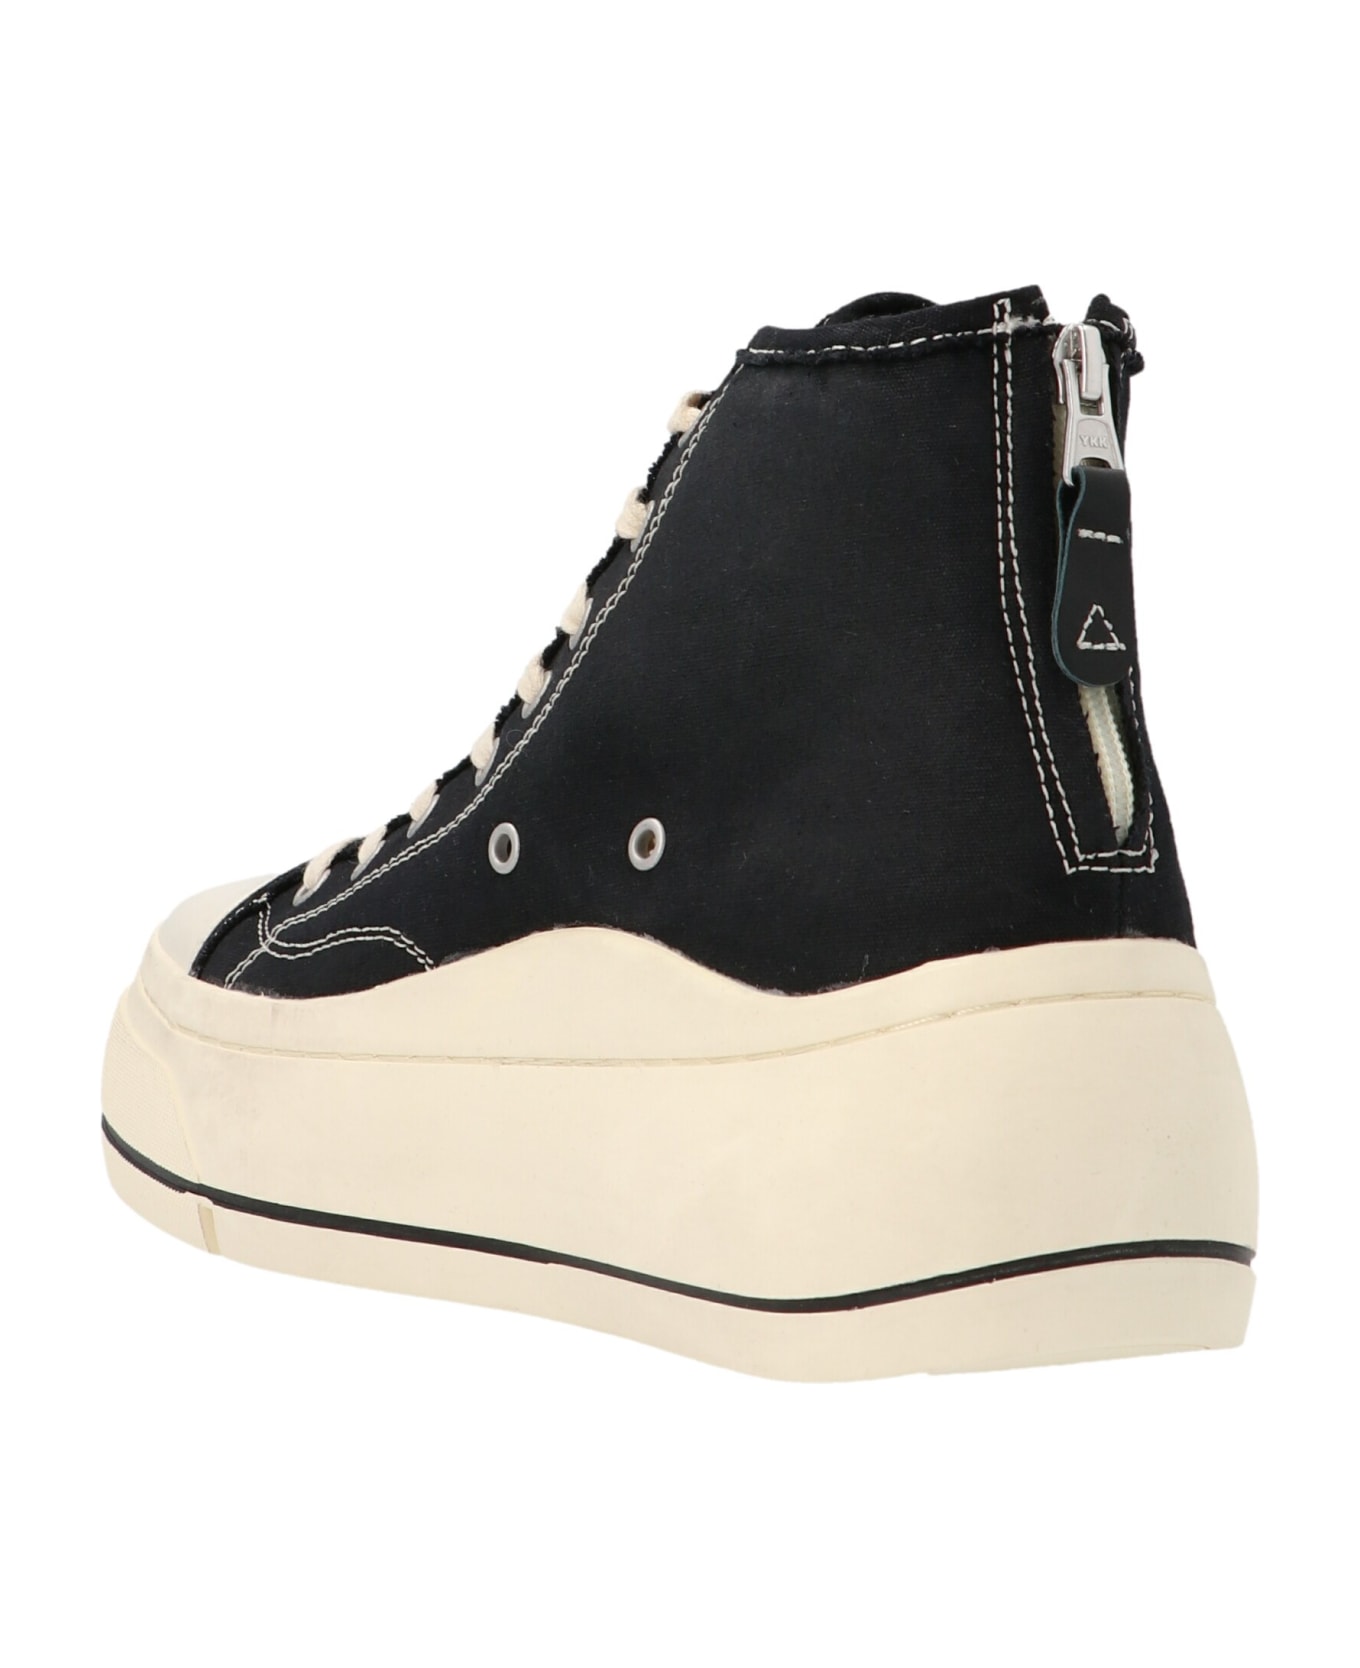 R13 'hi Top' Sneakers - White/Black